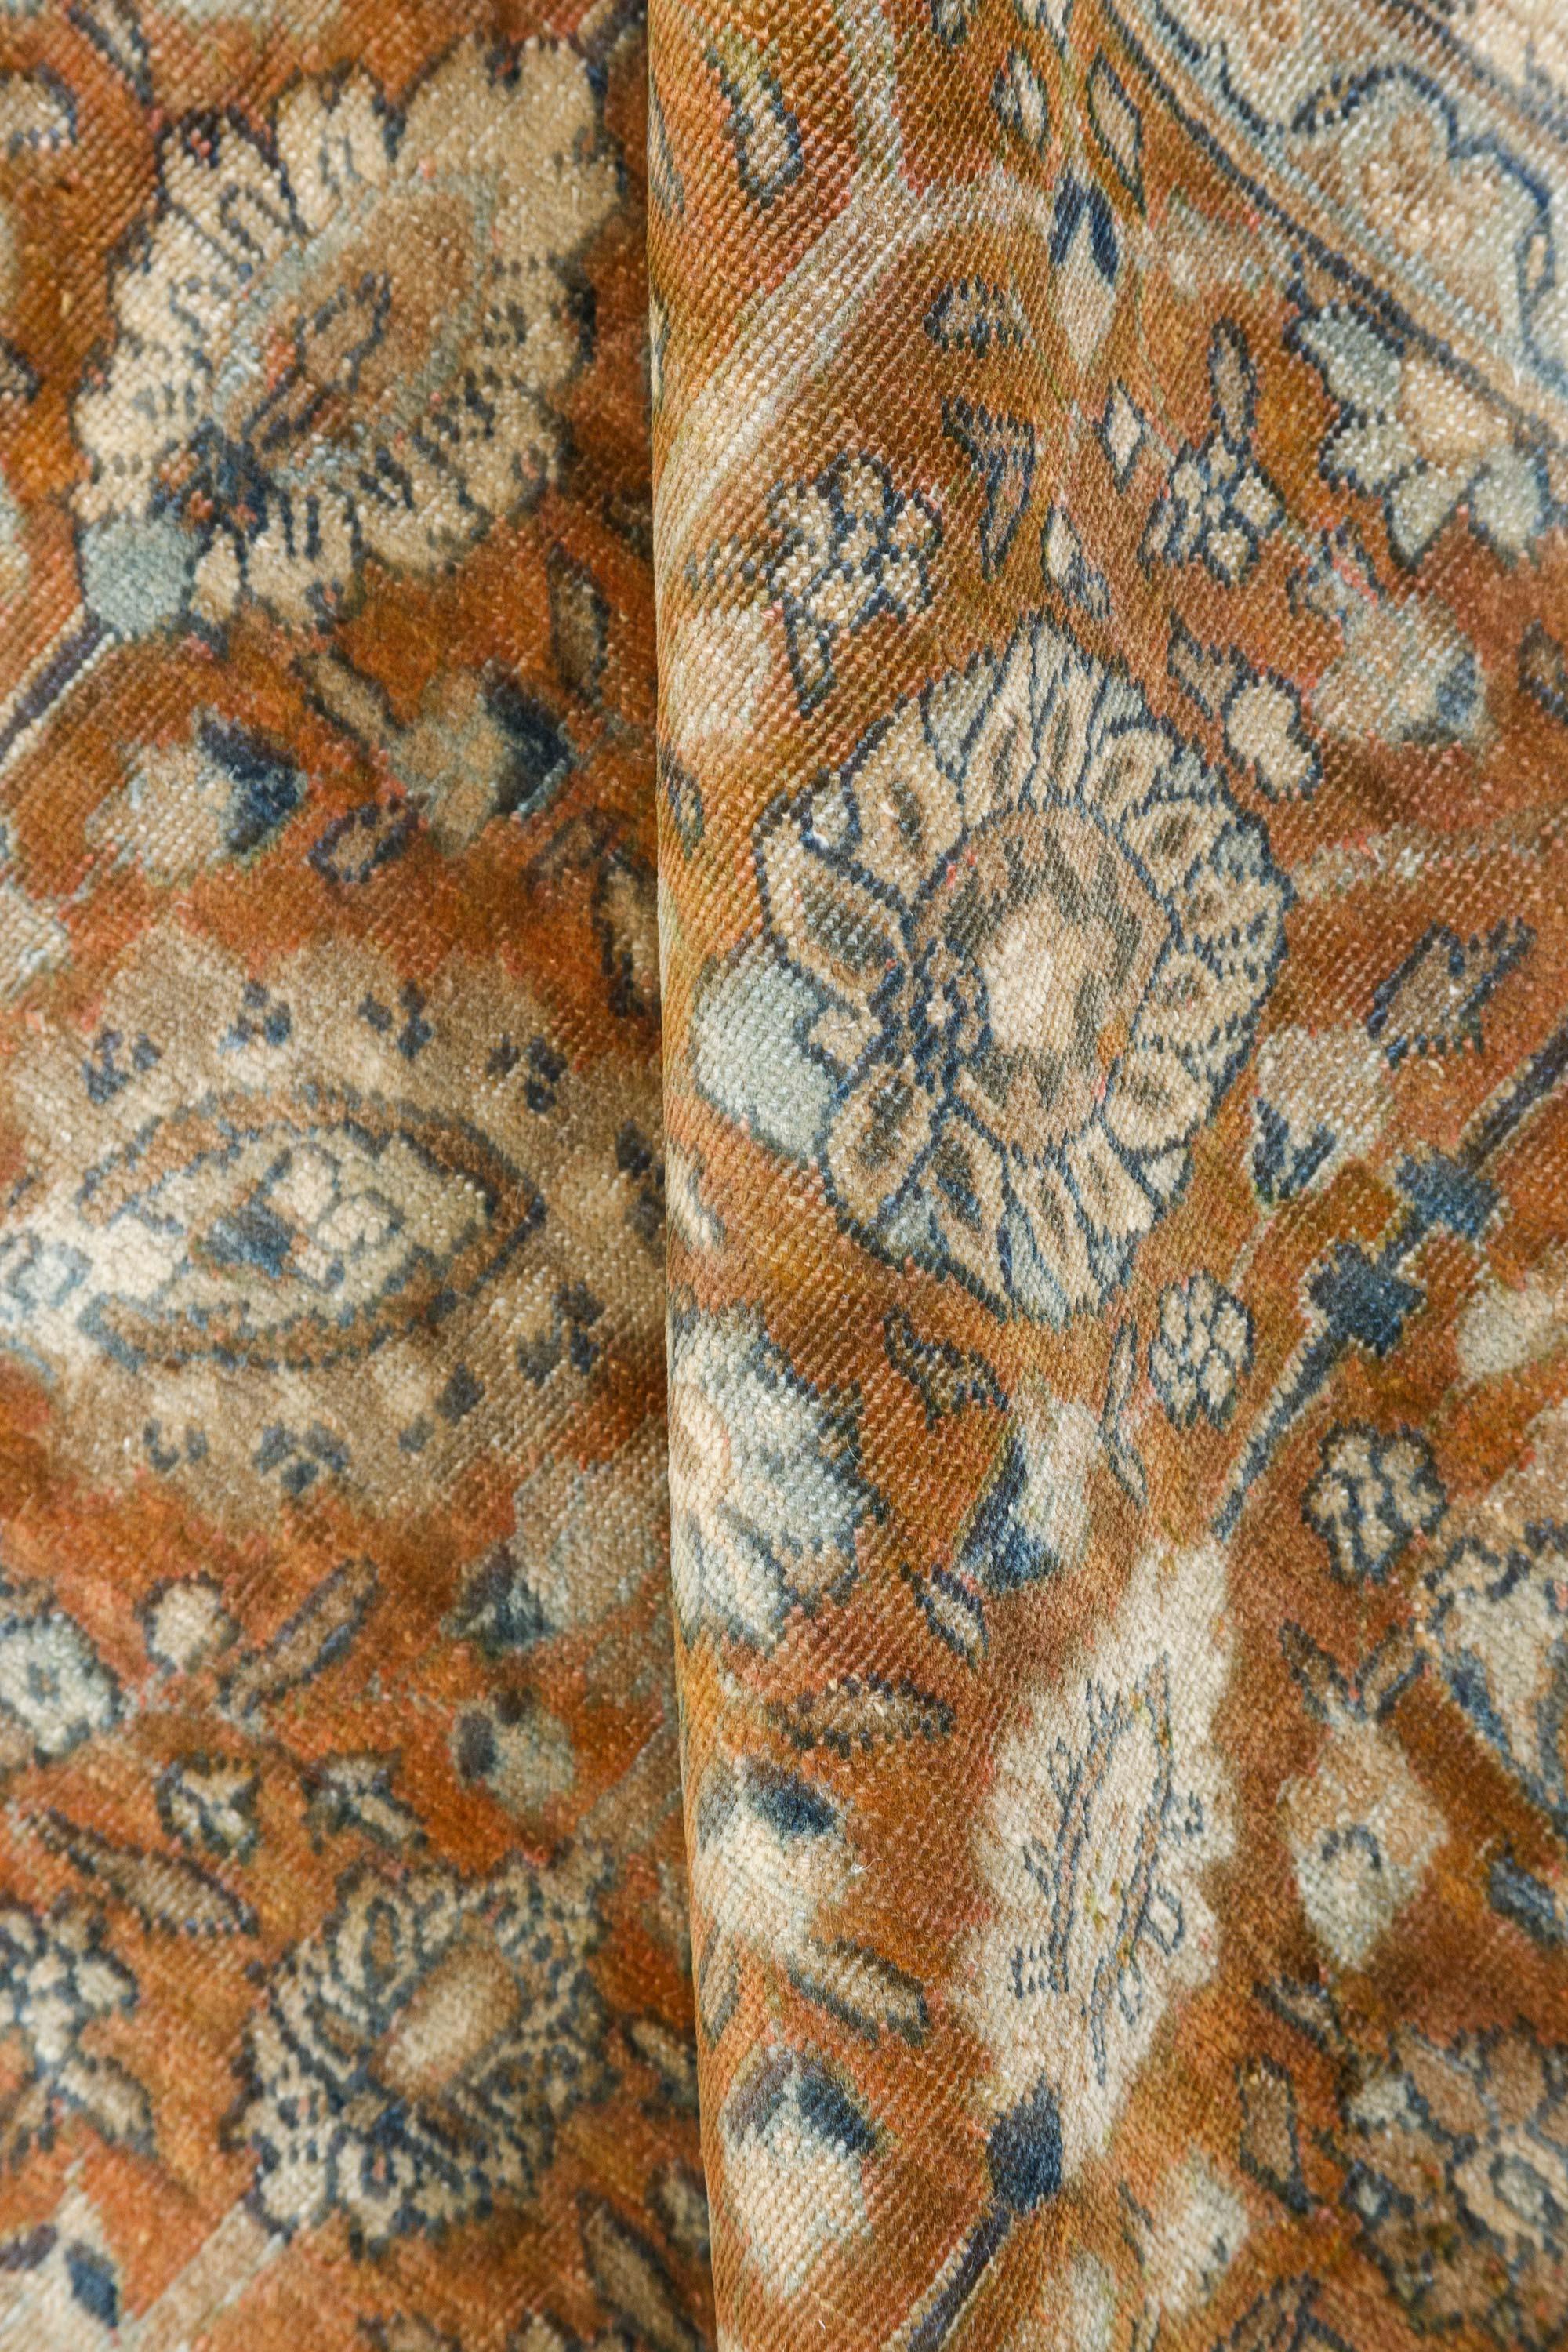 Authentic Persian Tabriz brown blue handmade wool carpet
Size: 11'10